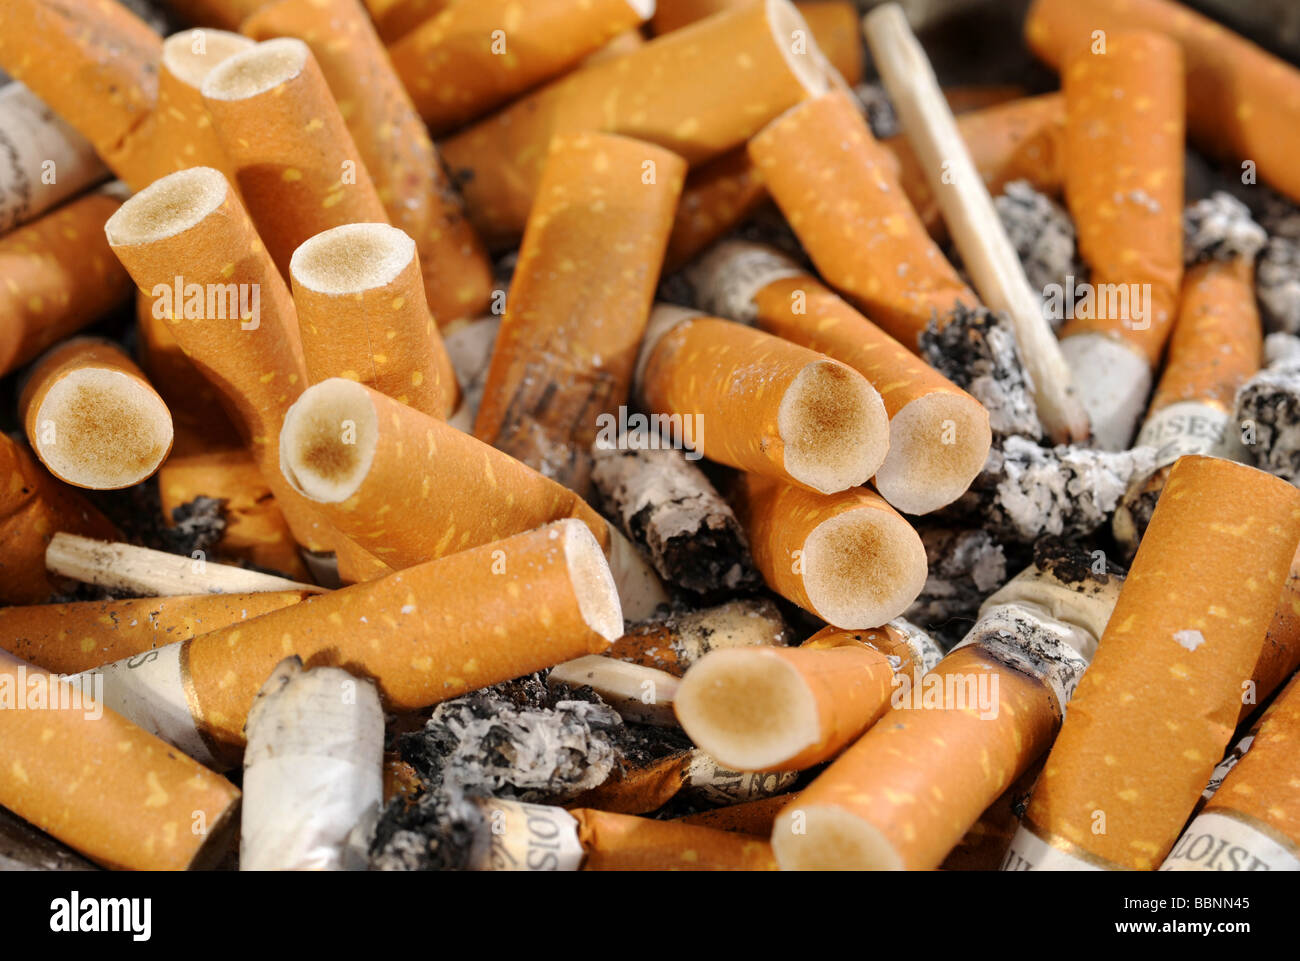 tobacco, cigarette stubs, Stock Photo